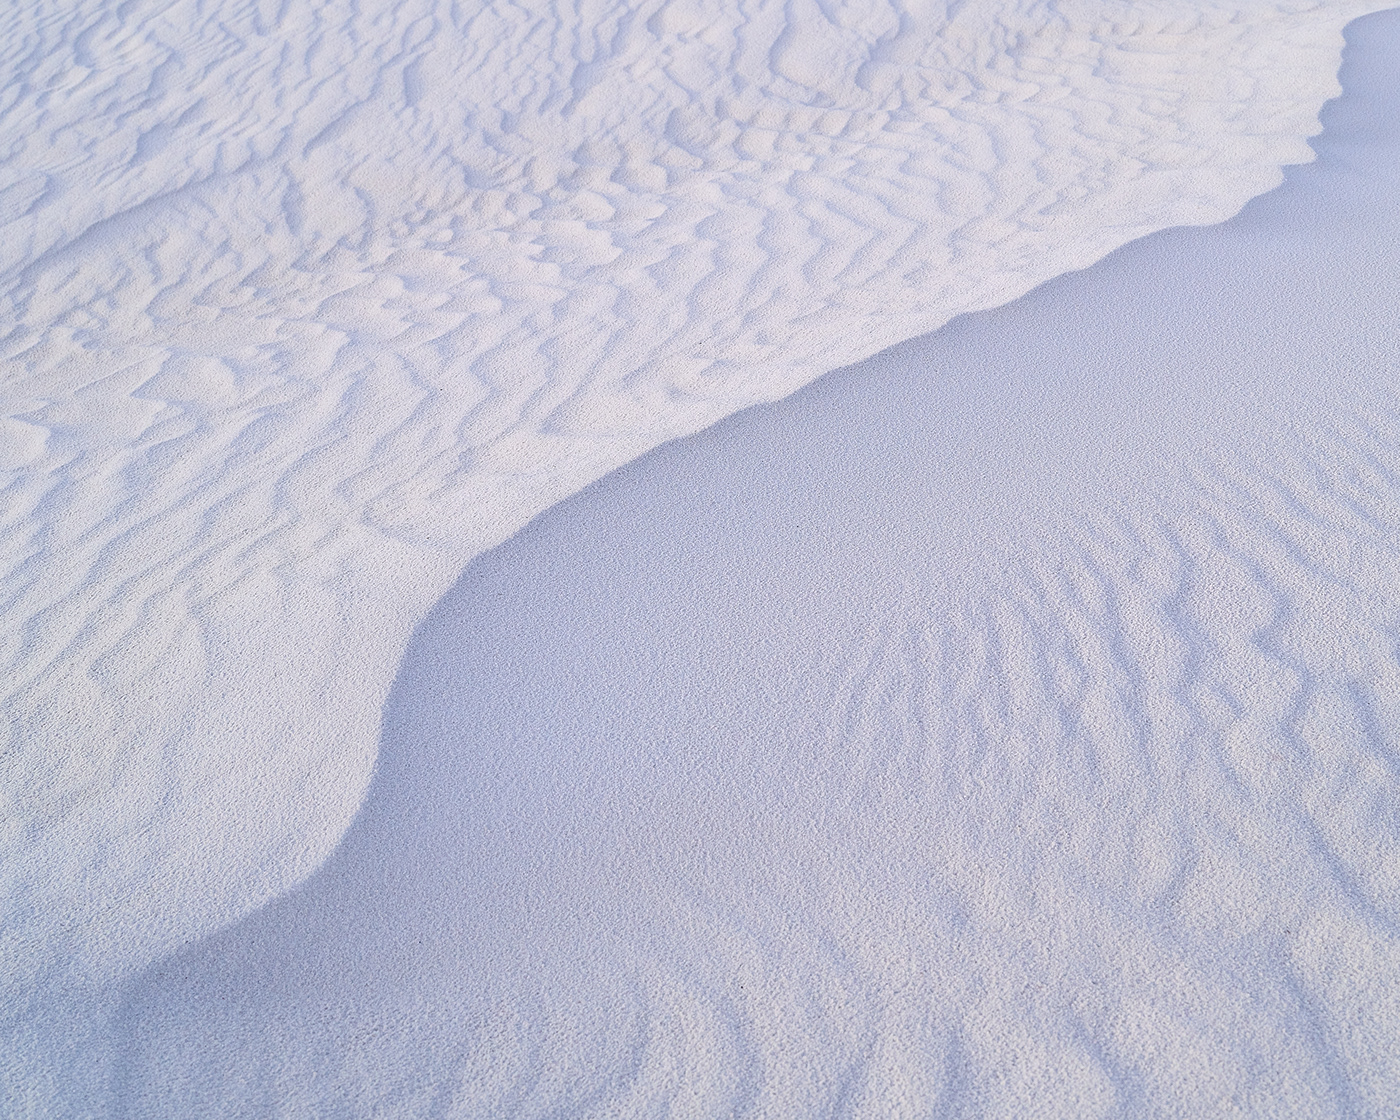 dune desert colorful new mexico Landscape desert color sand dunes White Sands pastel minimal